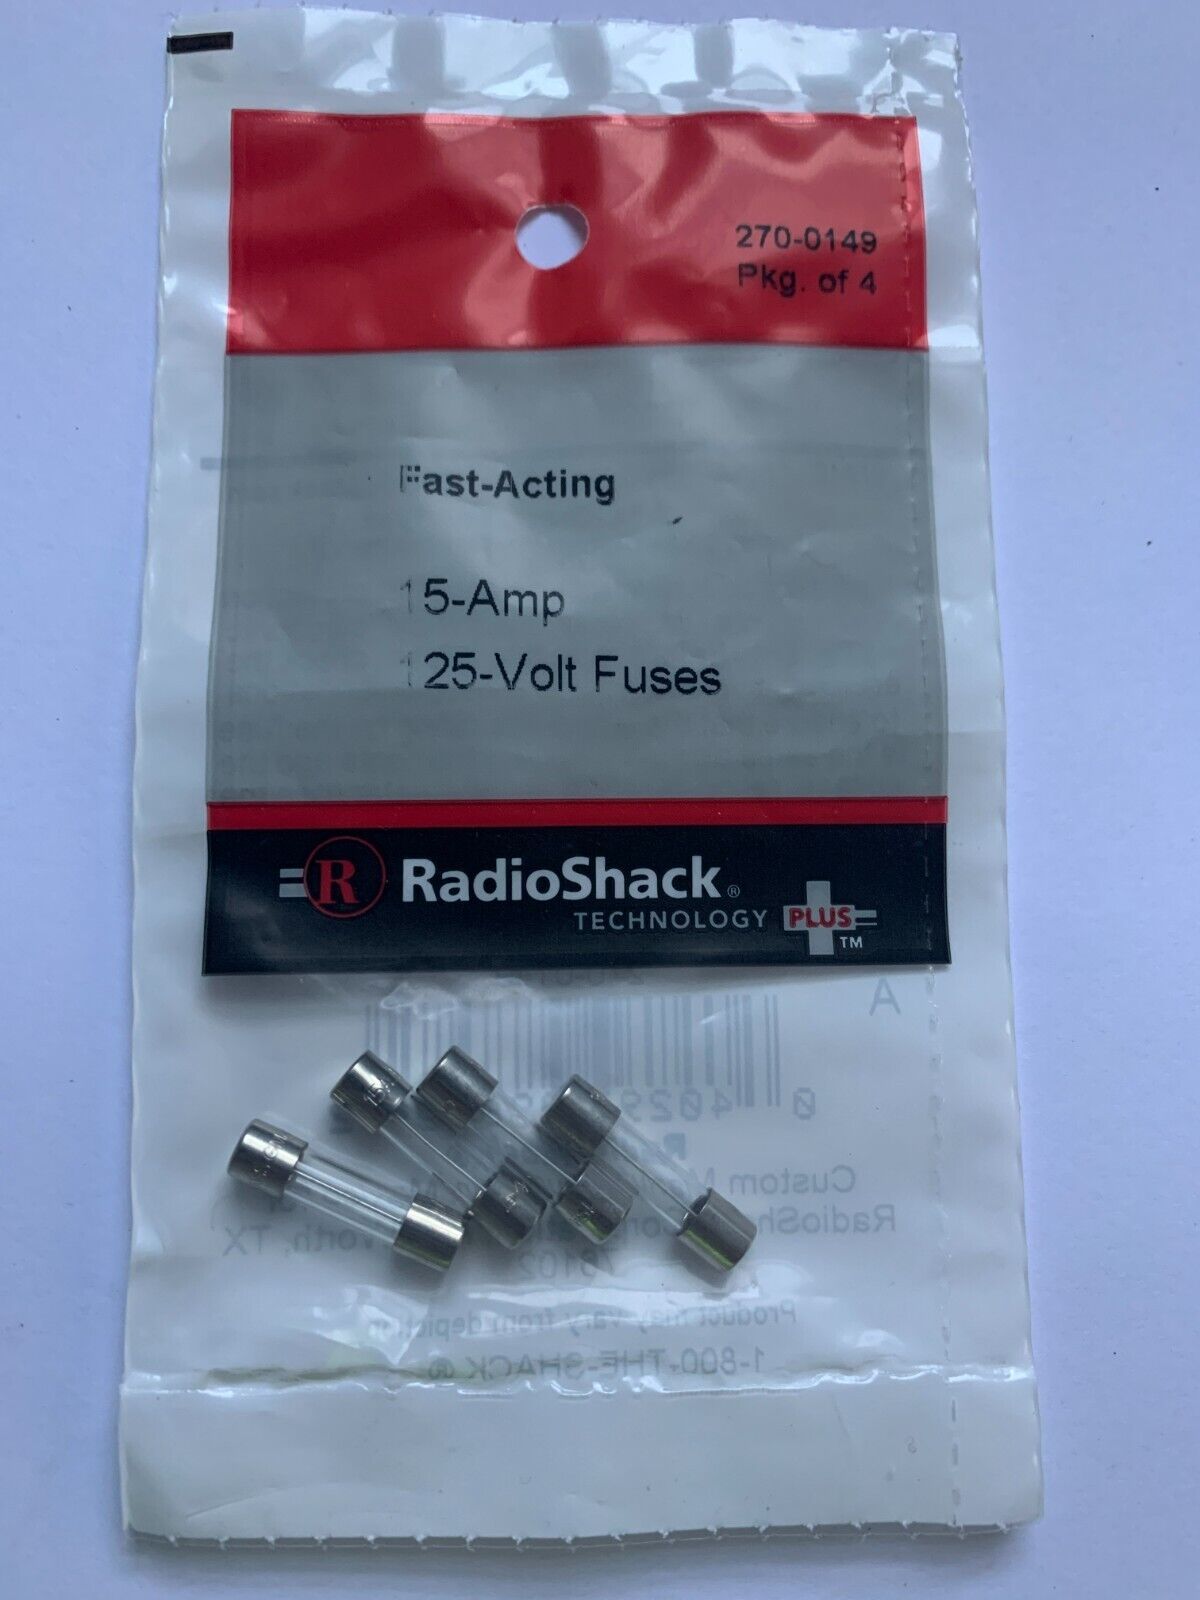 RadioShack 15 Amp 125 Volt Fast-Acting Fuses 270-0149 2700149 *FREE SHIPPING* - $7.99